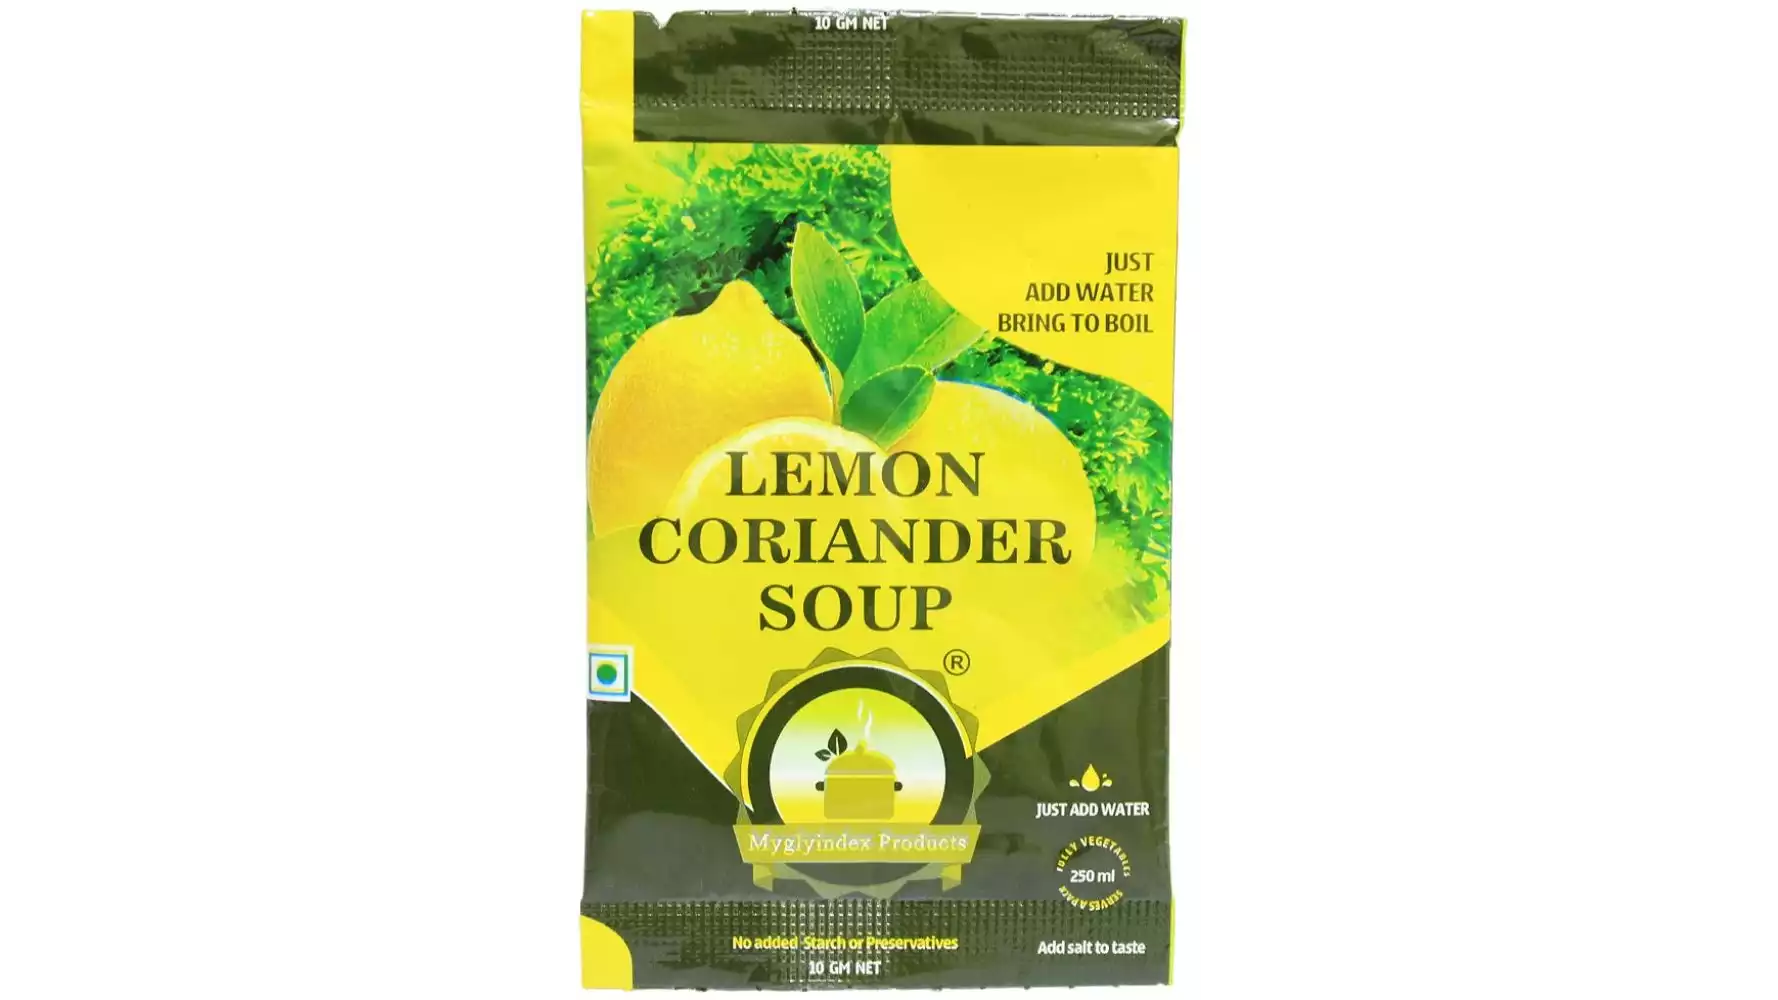 Myglyindex Products Lemon coriander Soup (15Sachet)